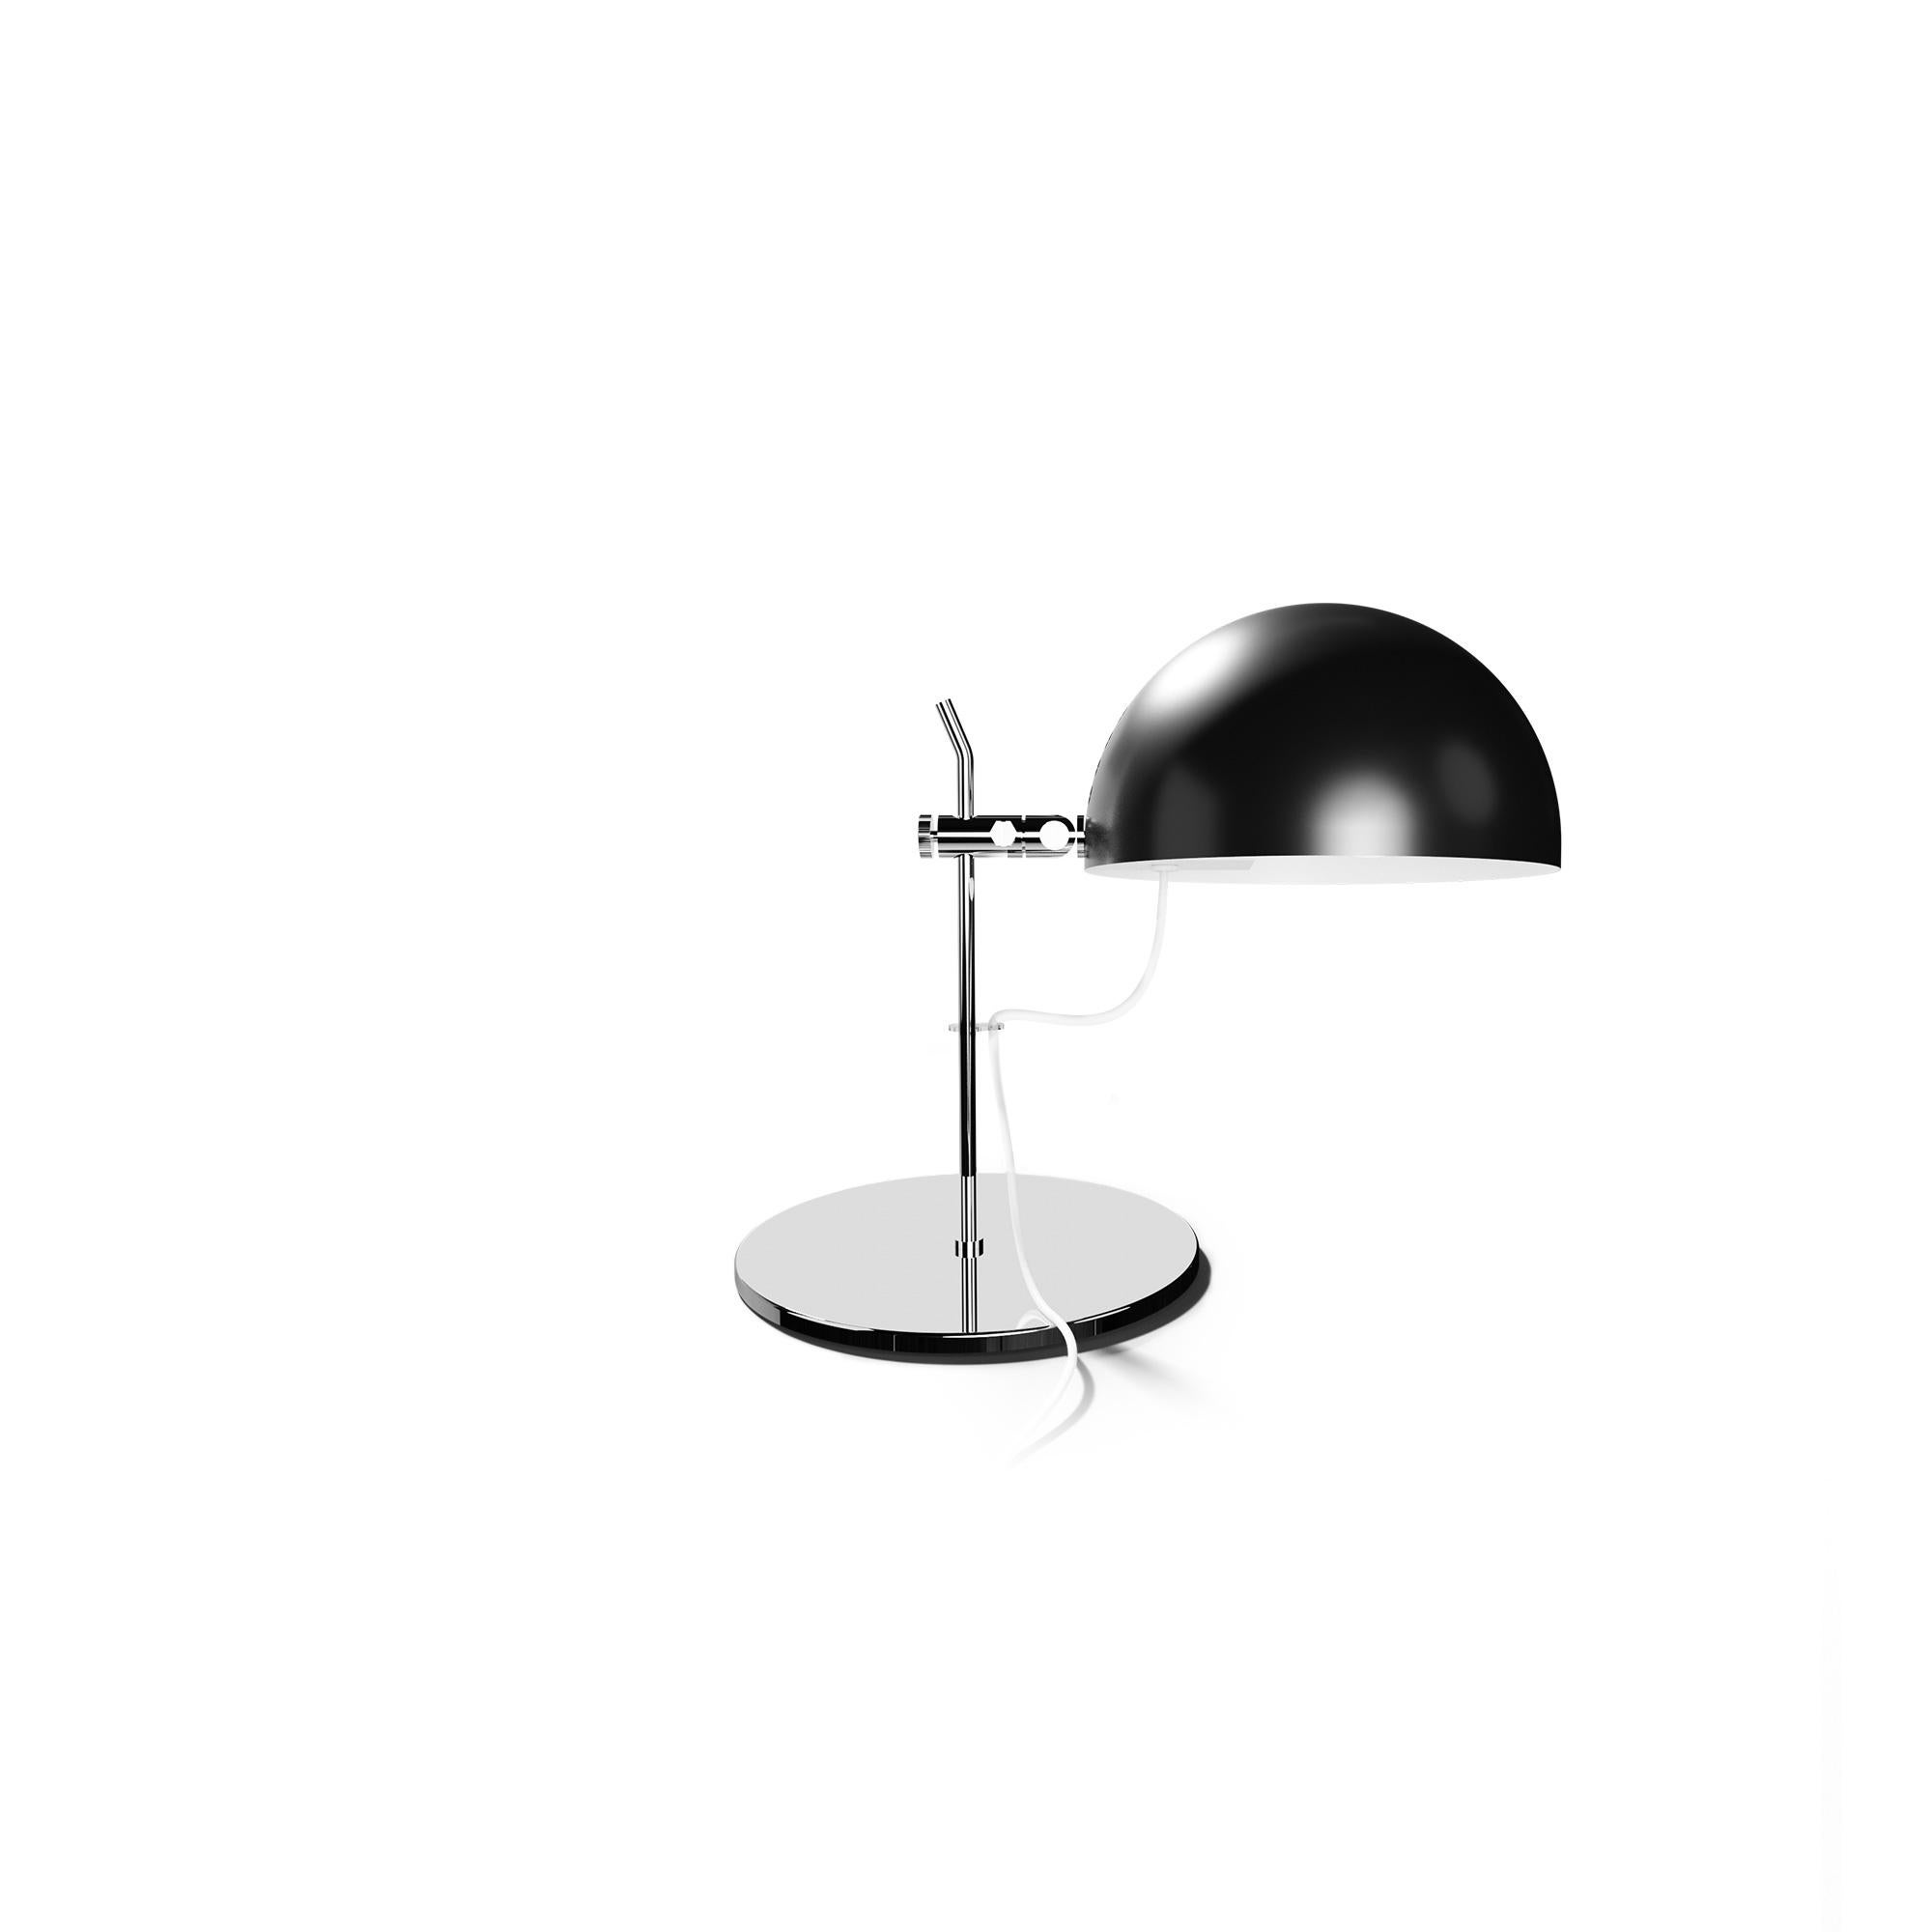 Alain Richard 'A23' Chrome and Marble Floor Lamp for Disderot For Sale 6